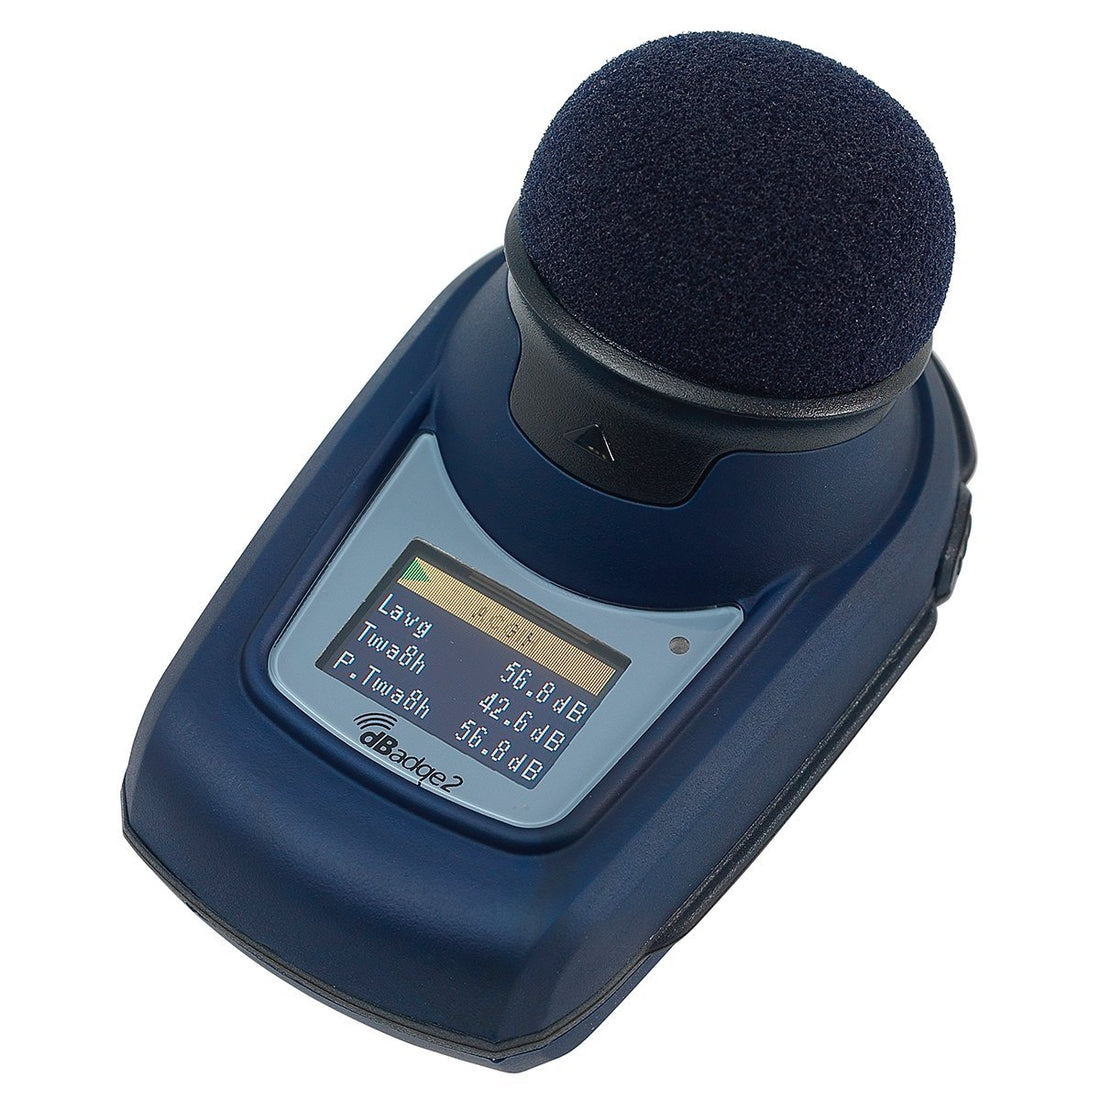 Casella dBadge2 IS, Standard Personal Noise Dosimeter